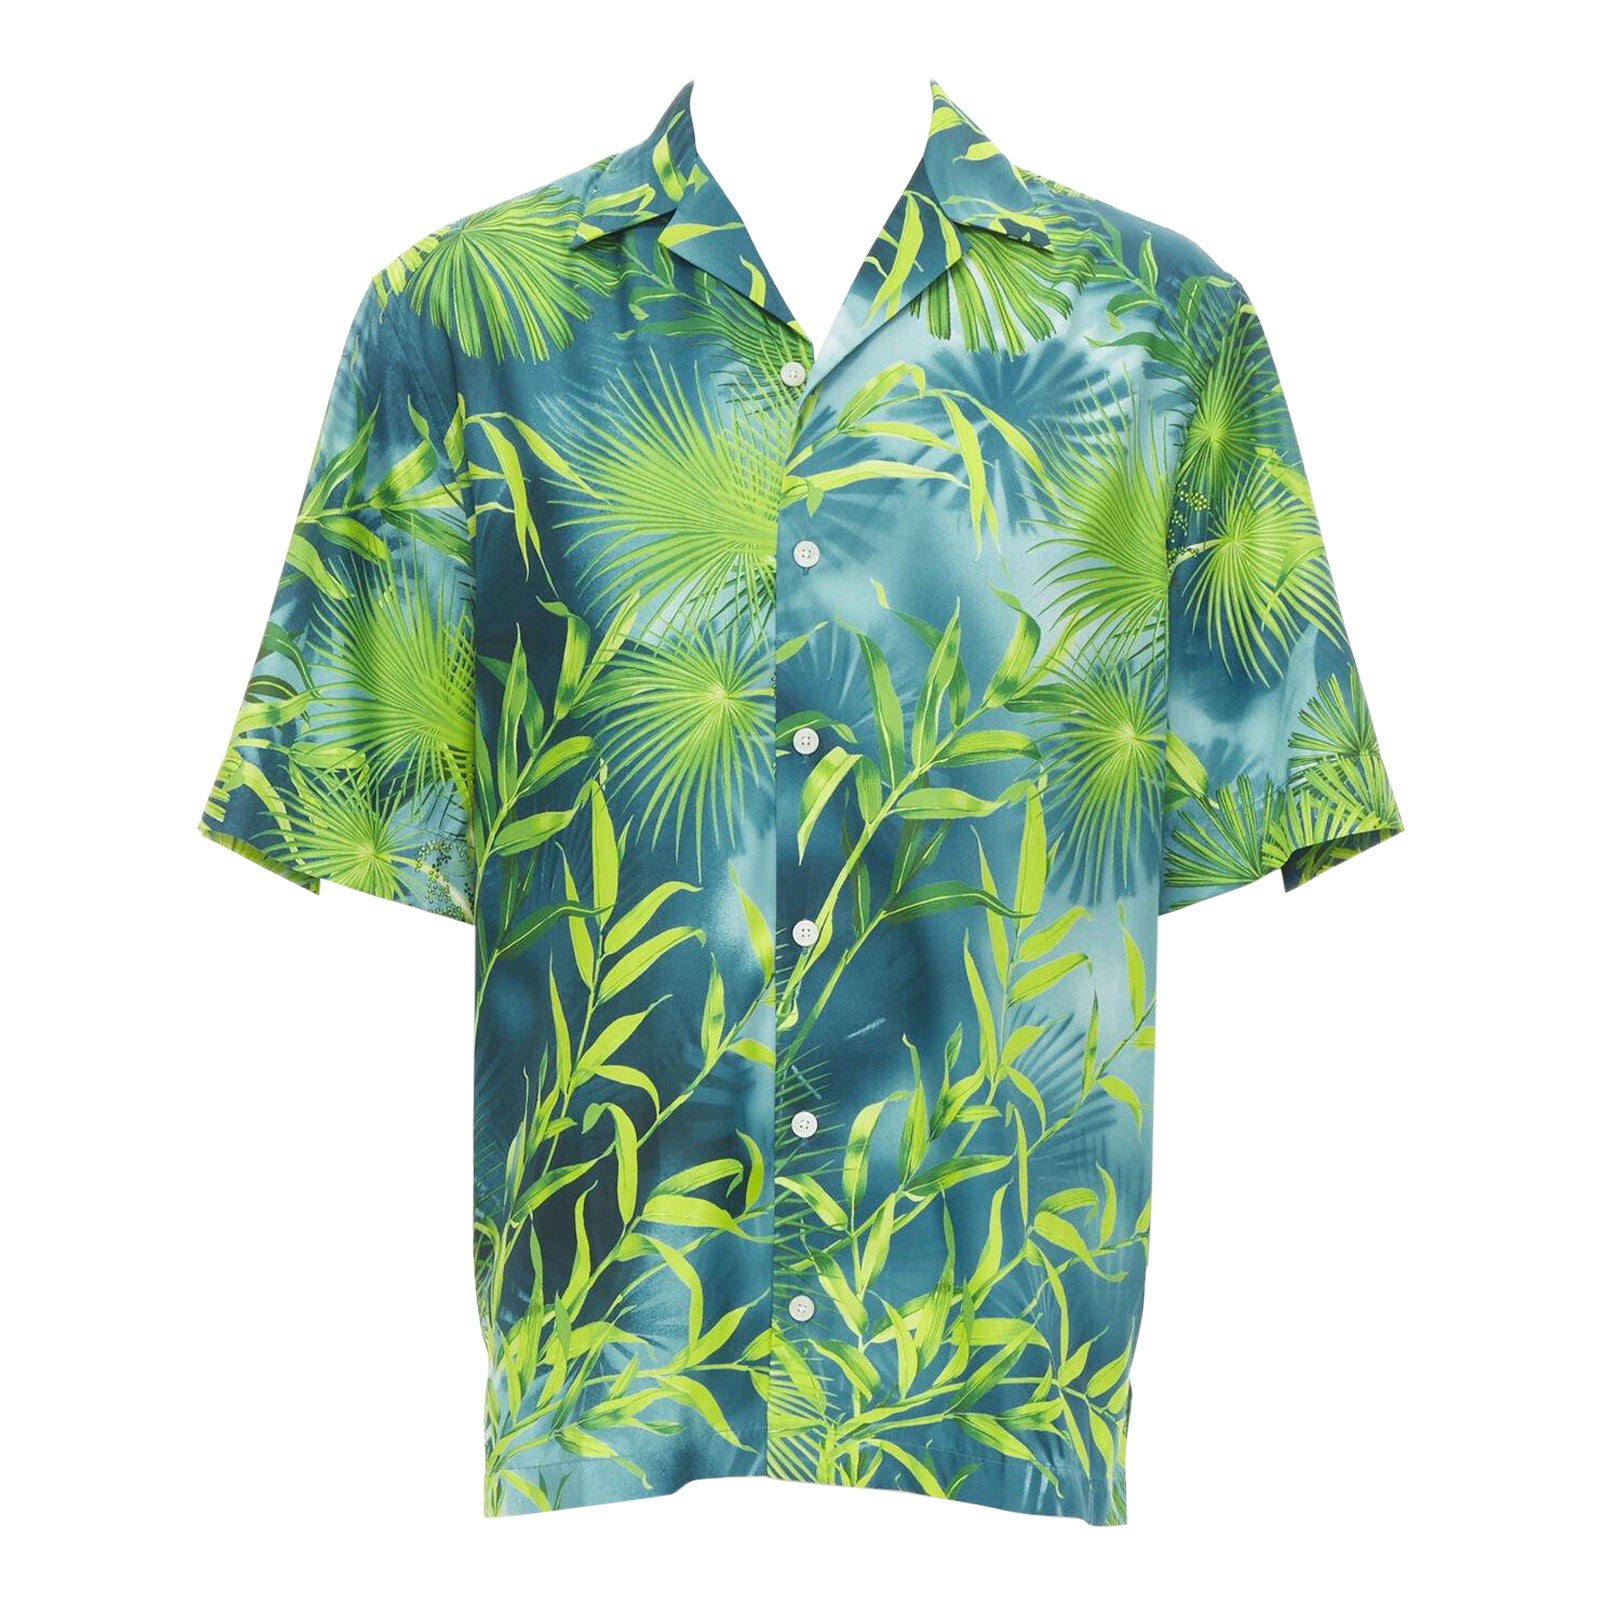 VERSACE 2020 Iconic JLo Jungle print green tropical print shirt EU38 S For Sale